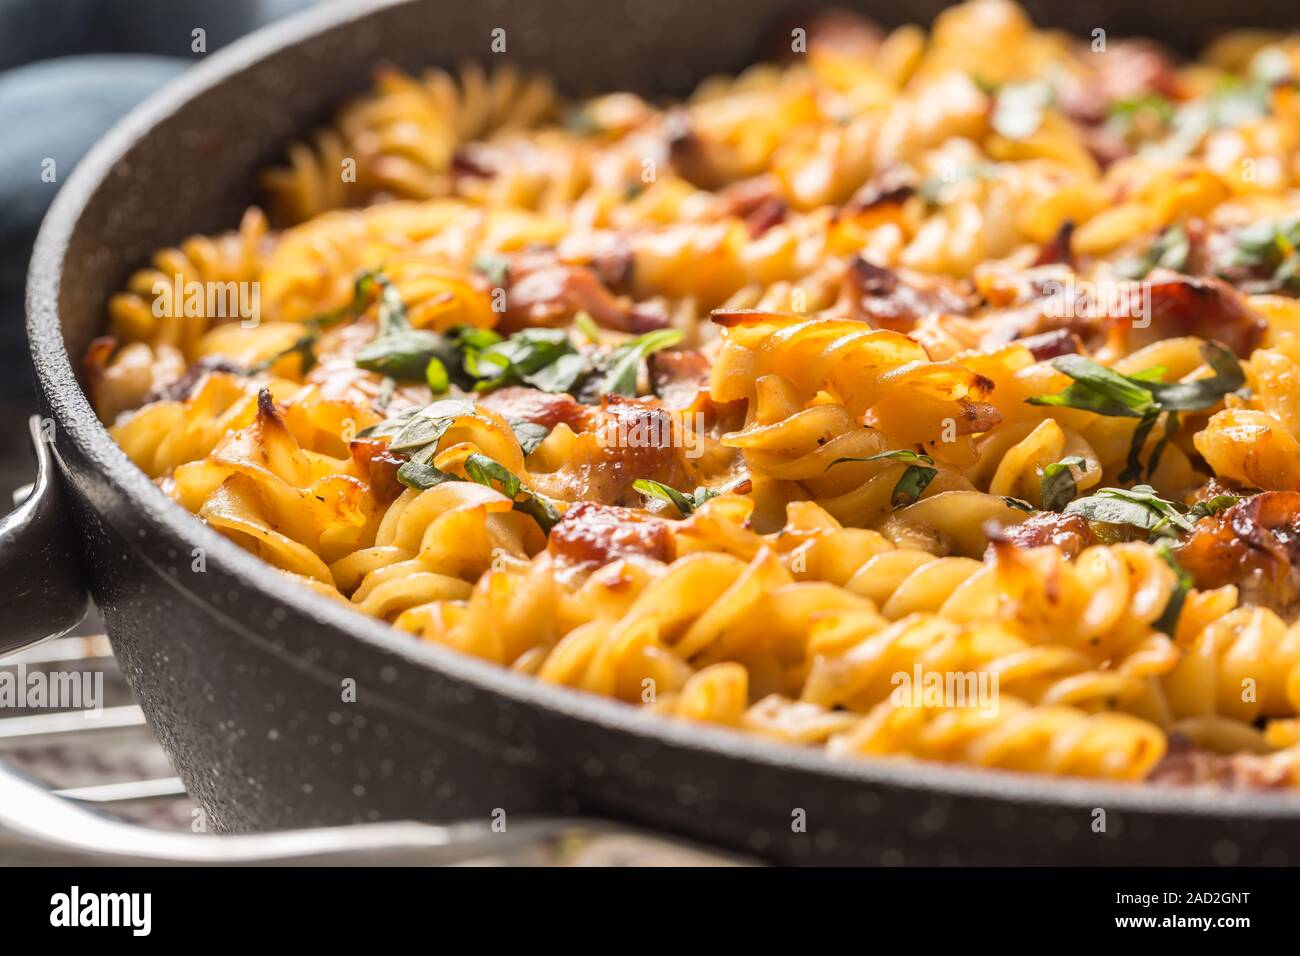 Baked pasta fusilli with smoked pork neck mozzarela cheese and othe ingredients Stock Photo